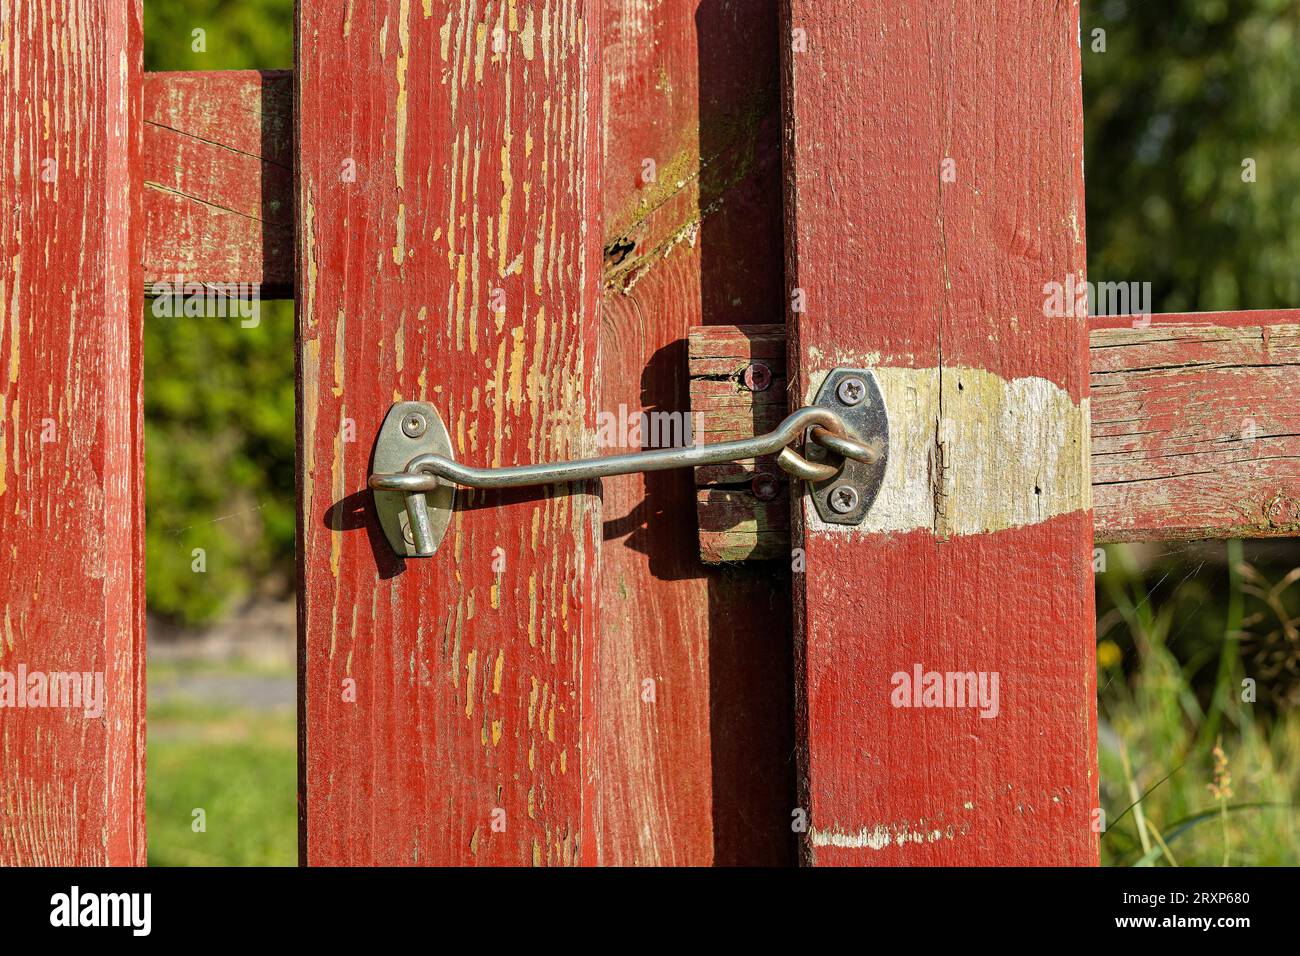 storm hook on wooden garden fence Stock Photo